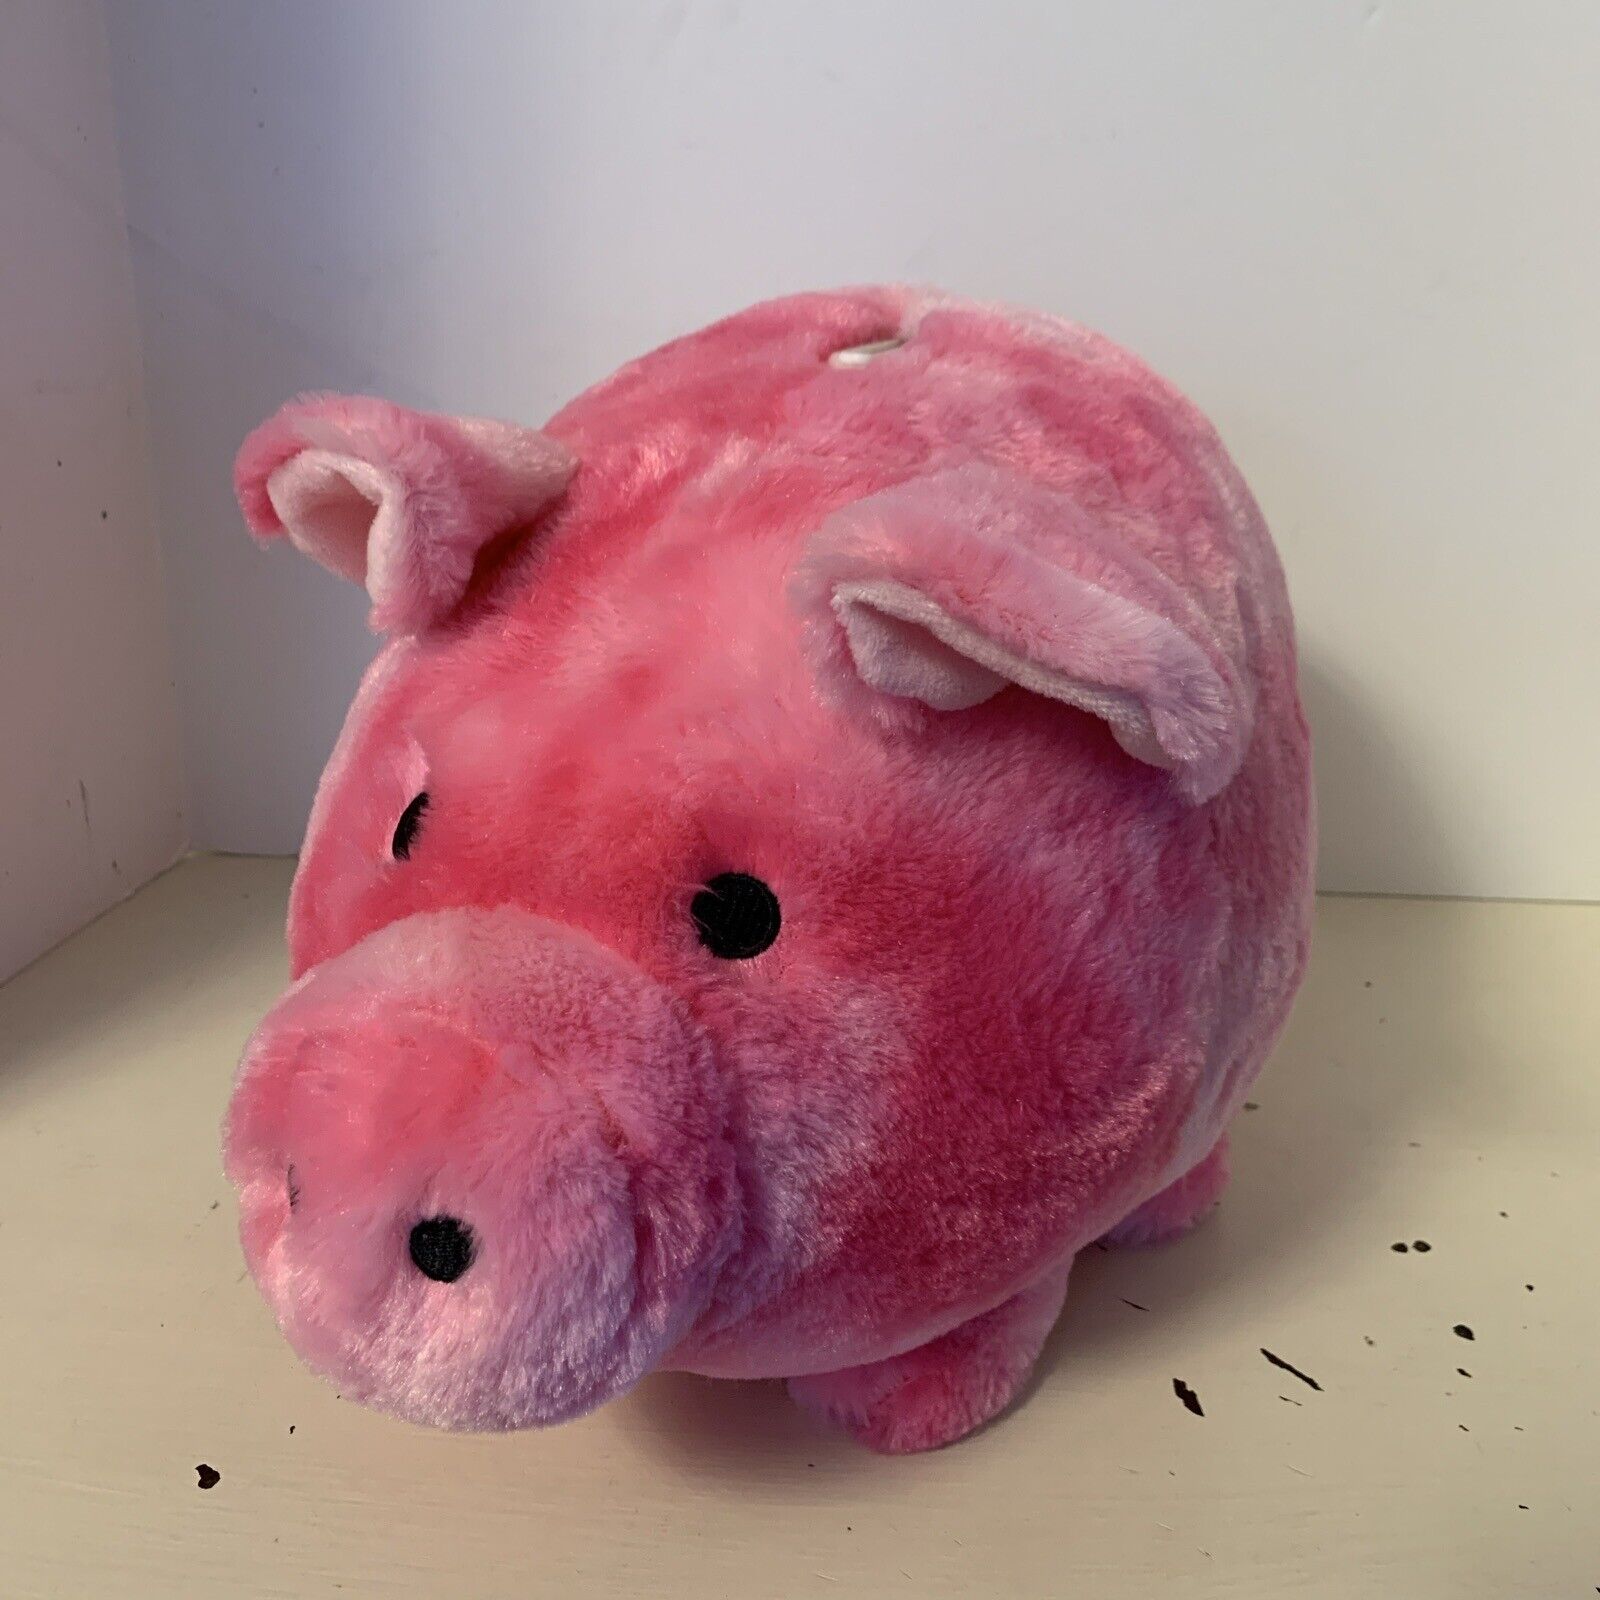 FABNY JUMBO Plush Piggy Bank Hot Pink Pig Soft Huggable 9”x9”x11”